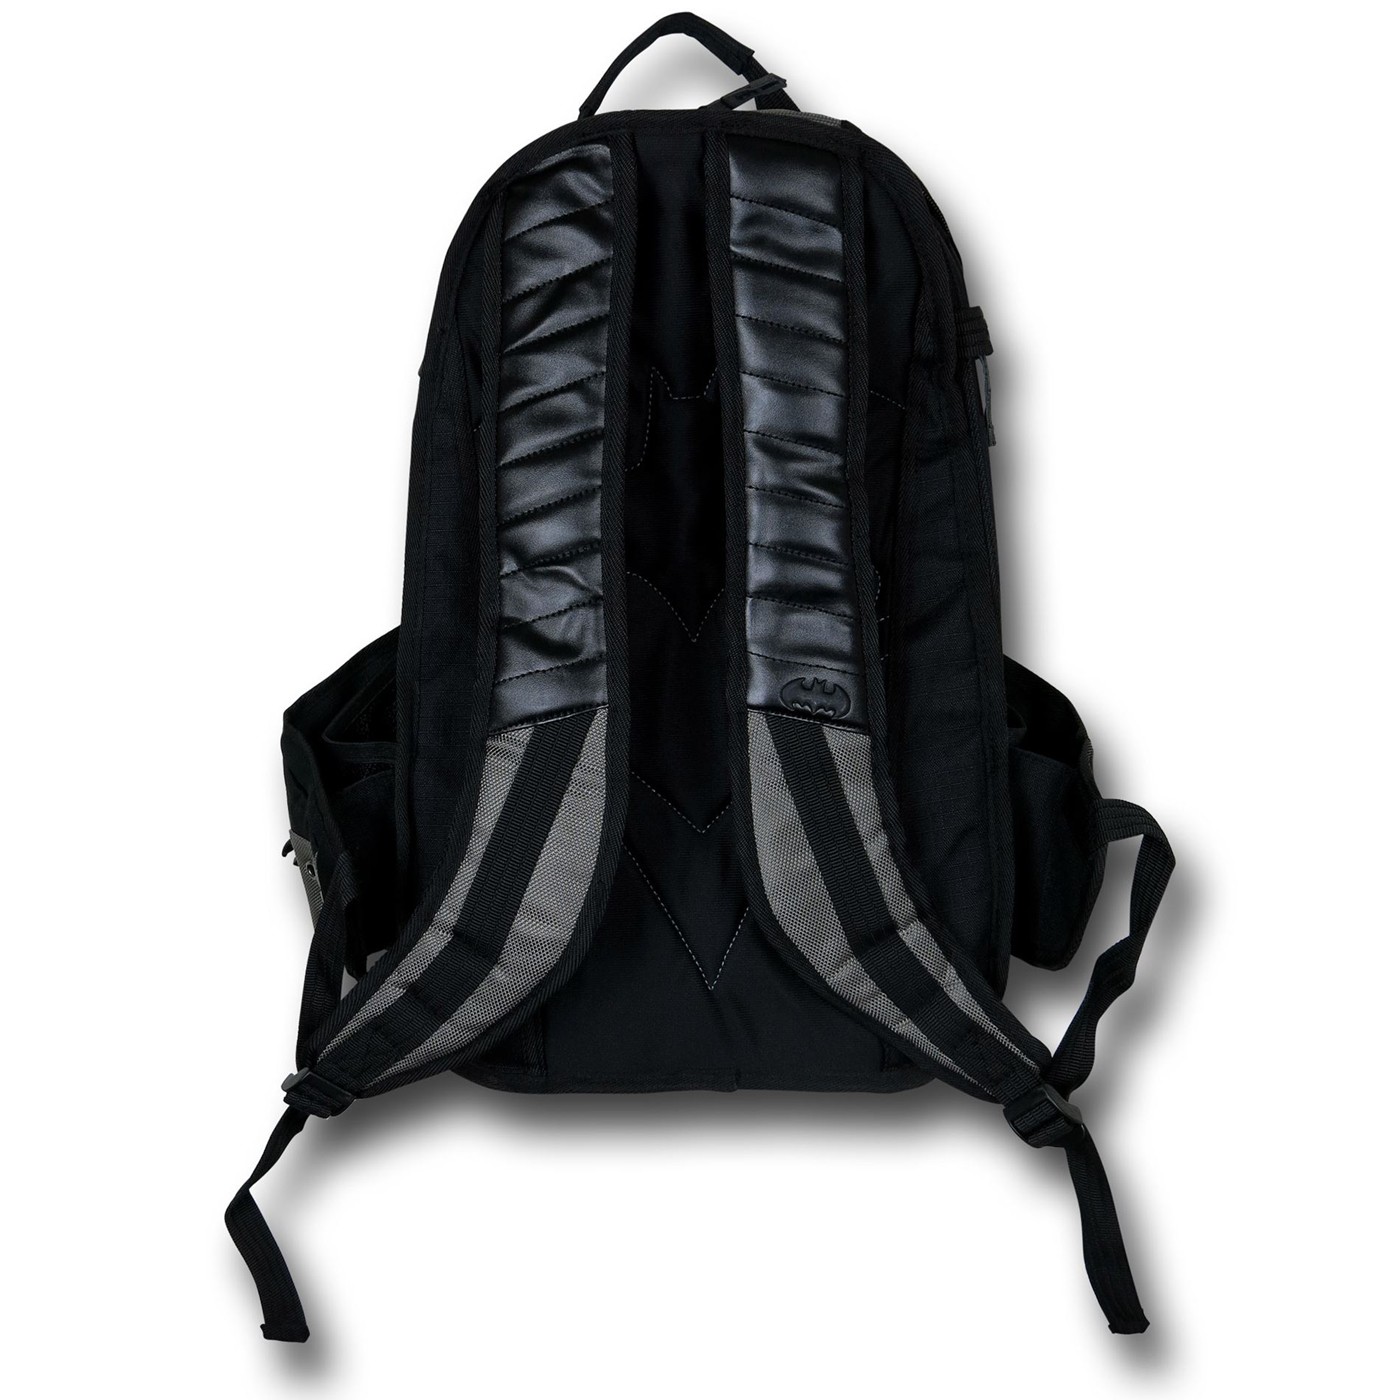 Batman Black Built Backpack